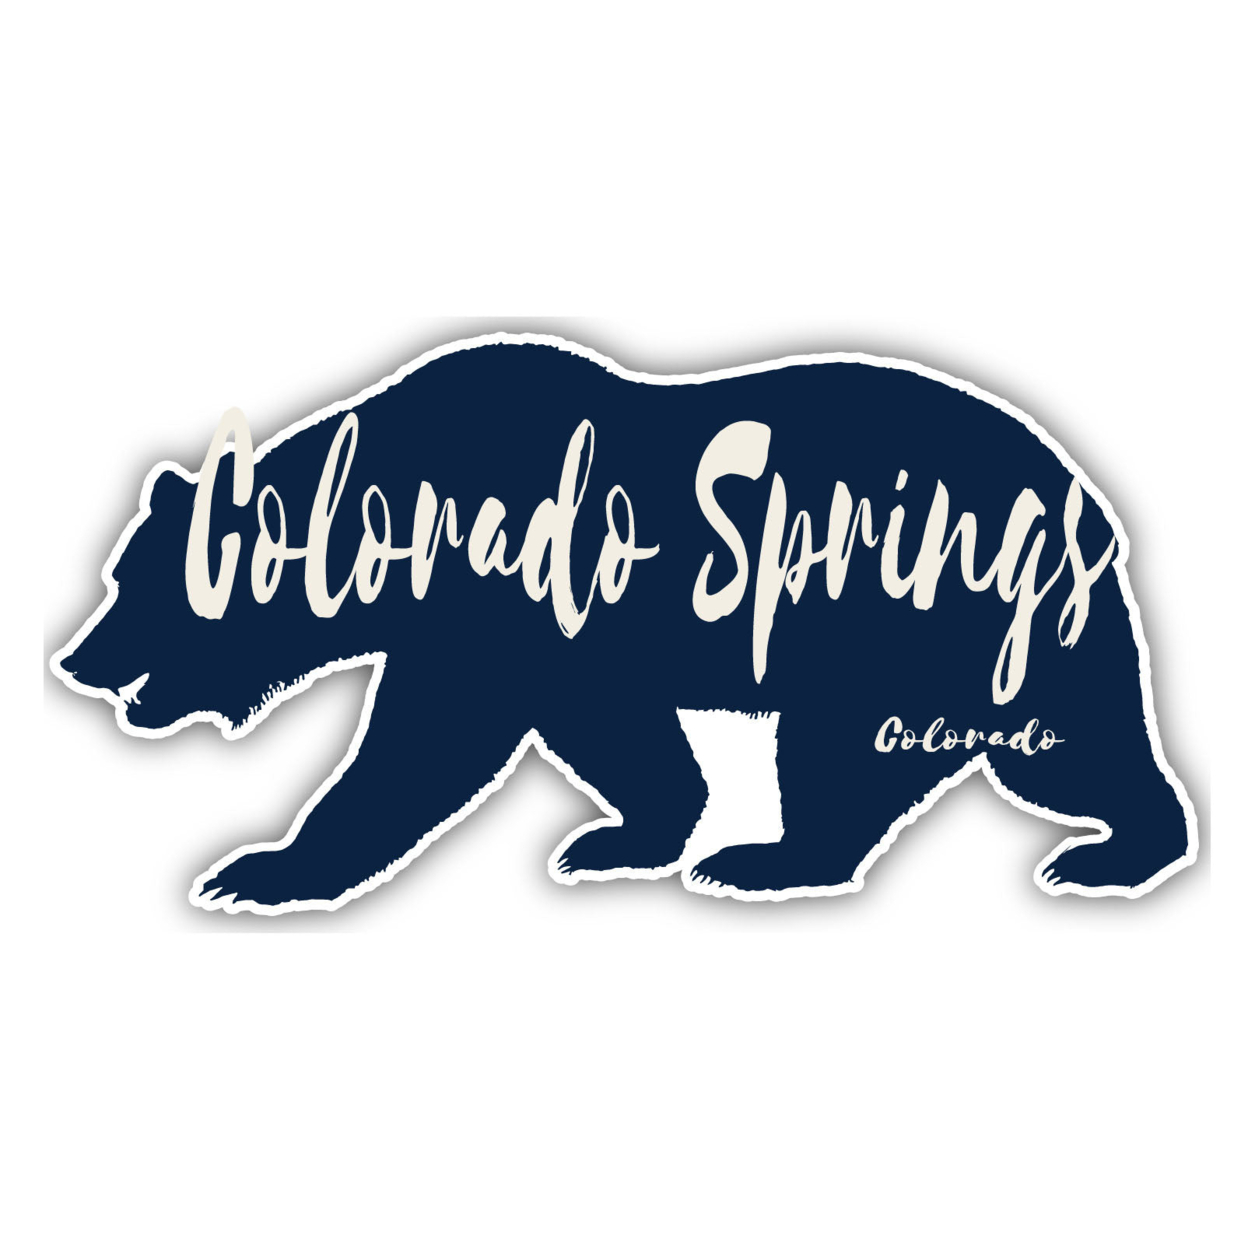 Colorado Springs Colorado Souvenir Decorative Stickers (Choose Theme And Size) - 4-Pack, 12-Inch, Adventures Awaits